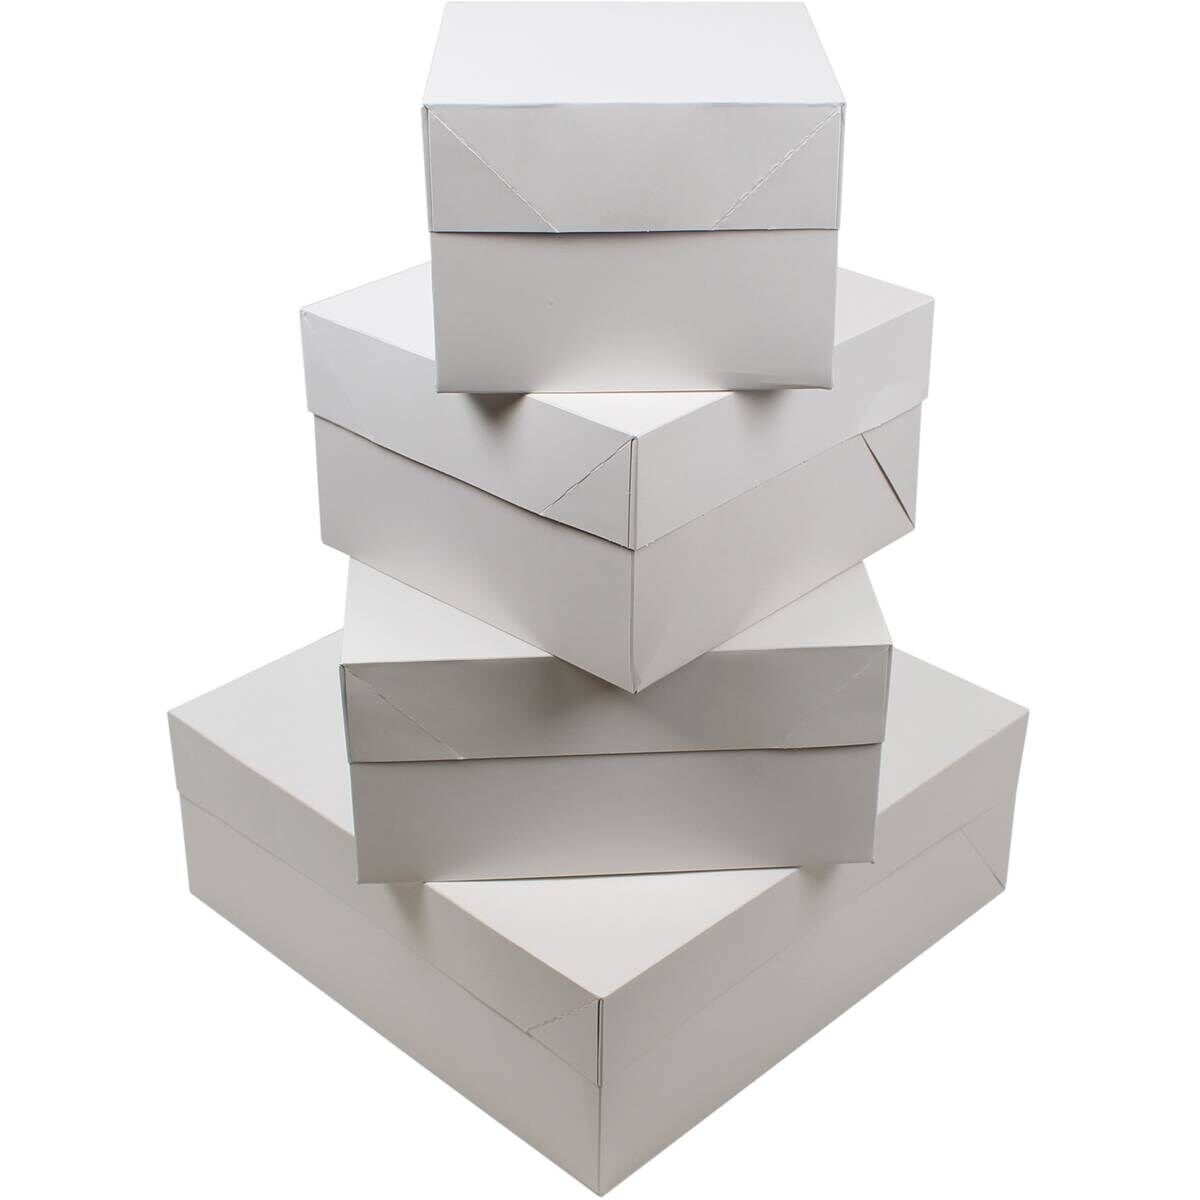 16 Inch Cardboard Cake Box | Hobbycraft